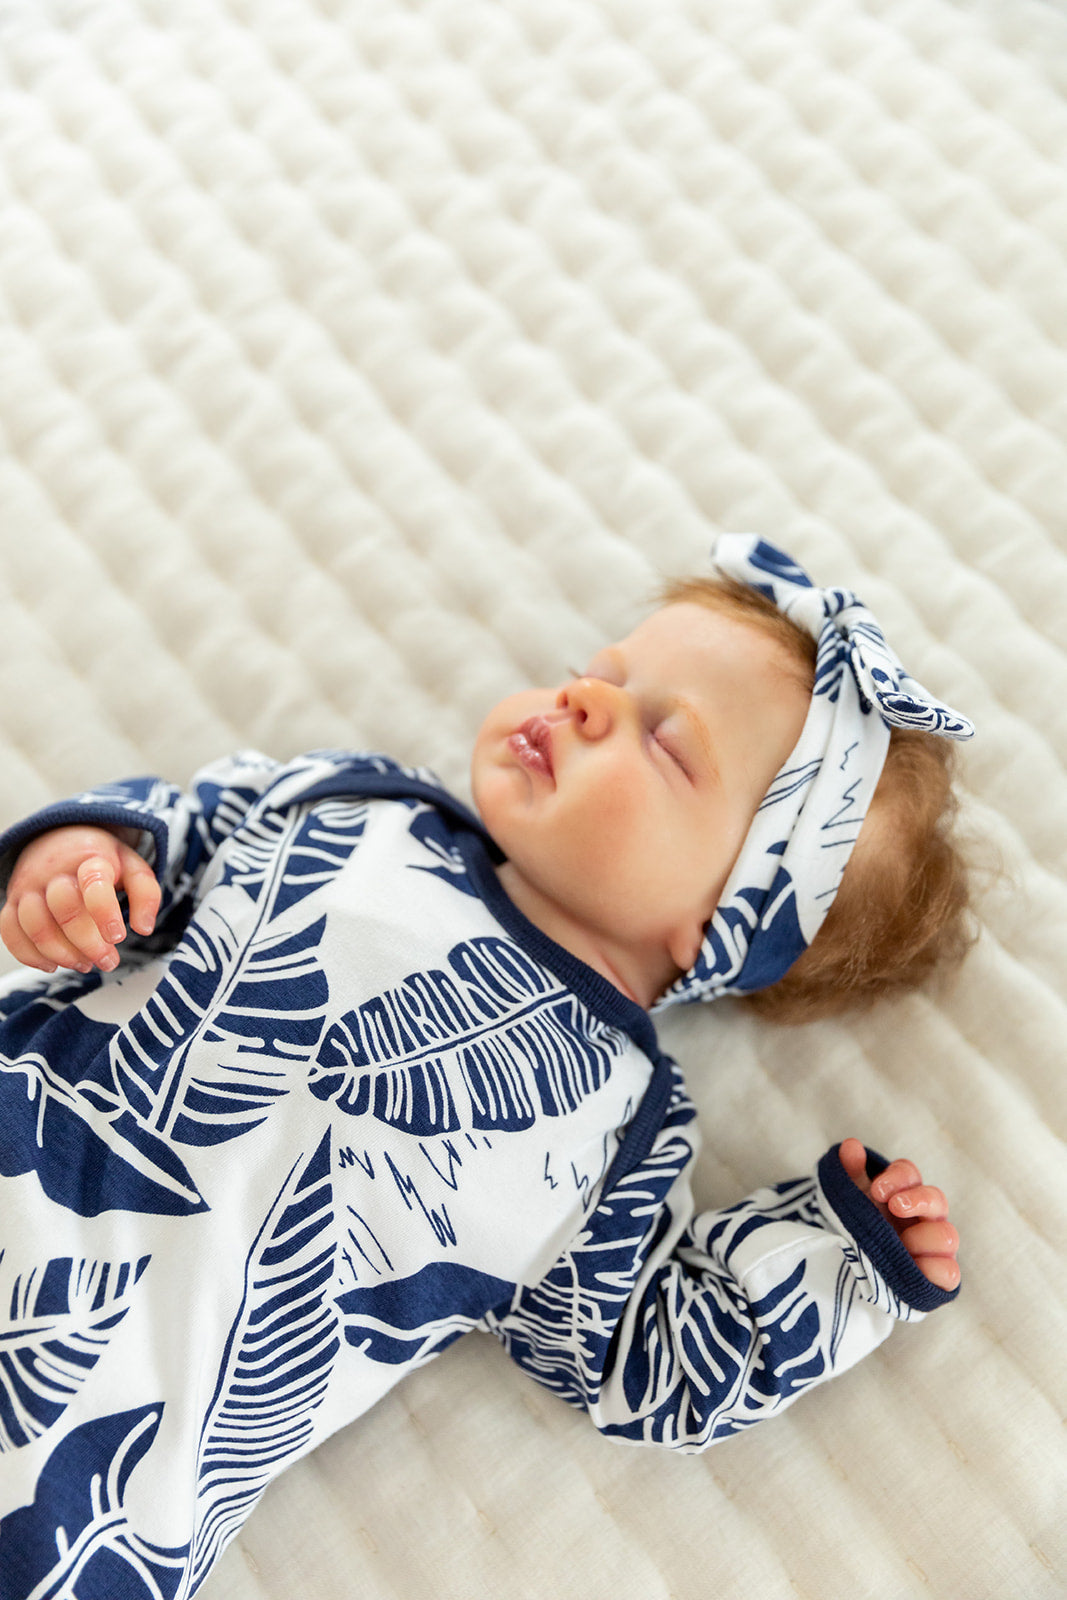 Serra Baby Gown and Matching Newborn Headband 2pc Set